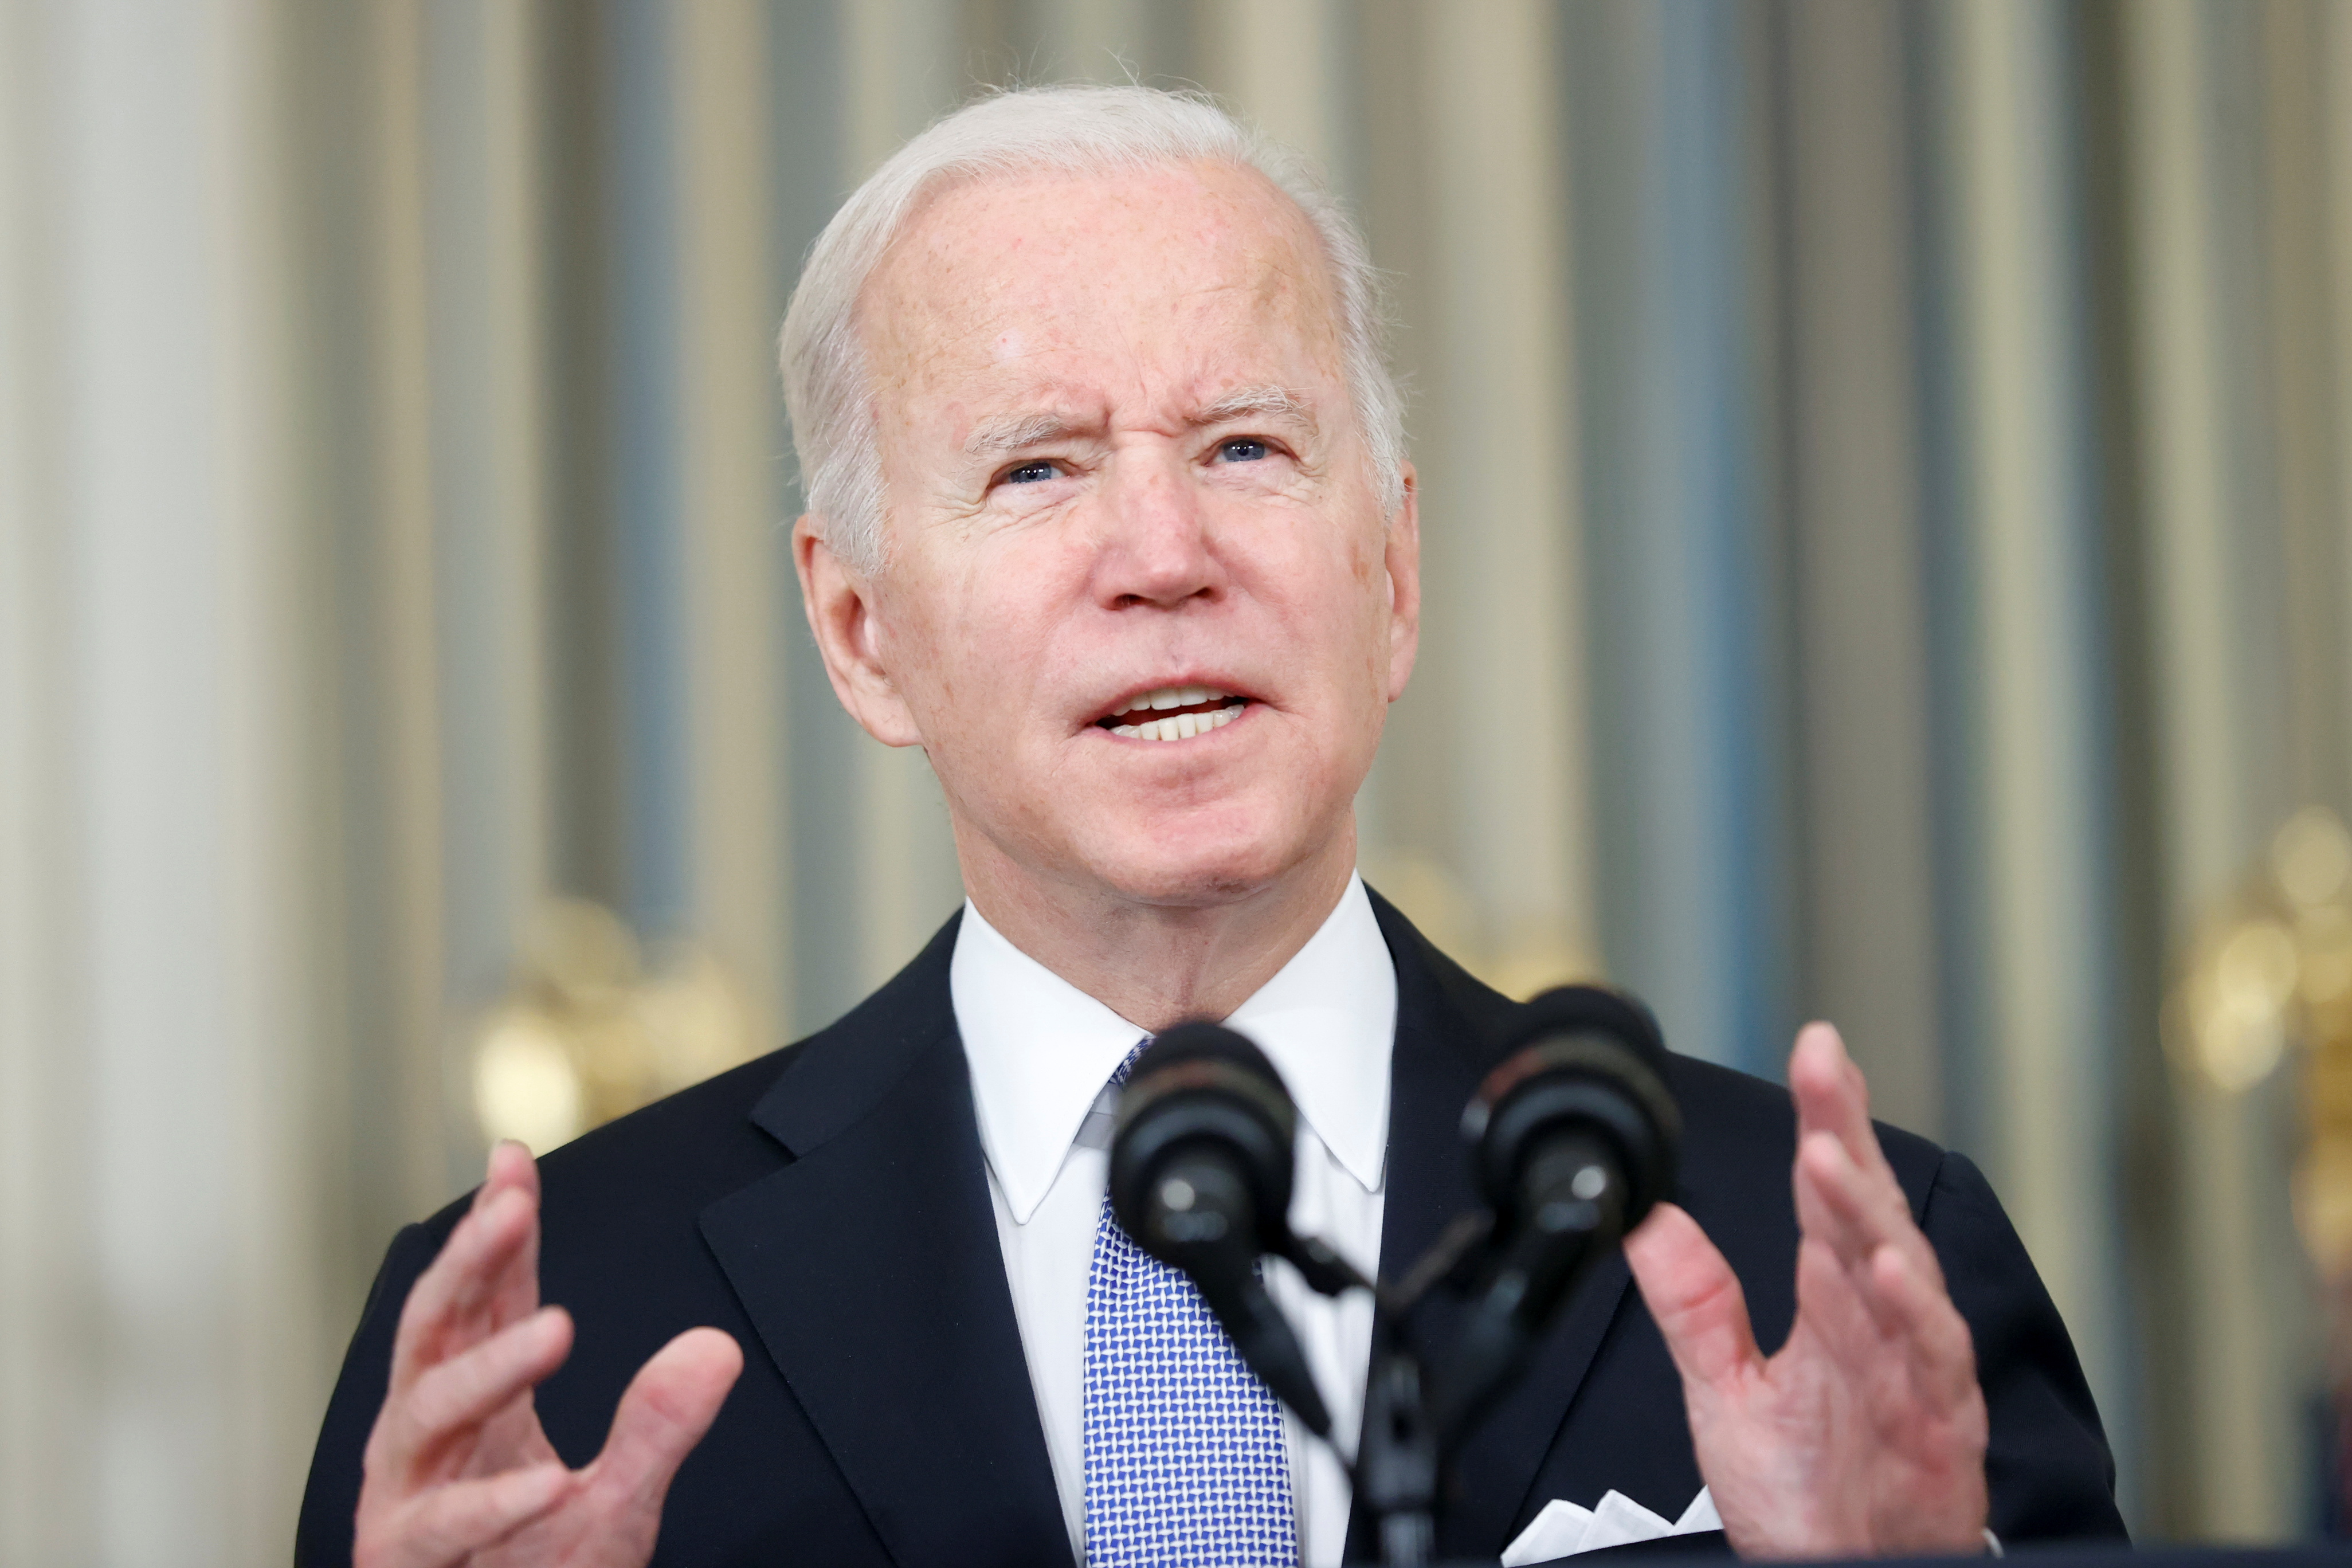 U.S. President Biden speaks during a news conference, in Washington